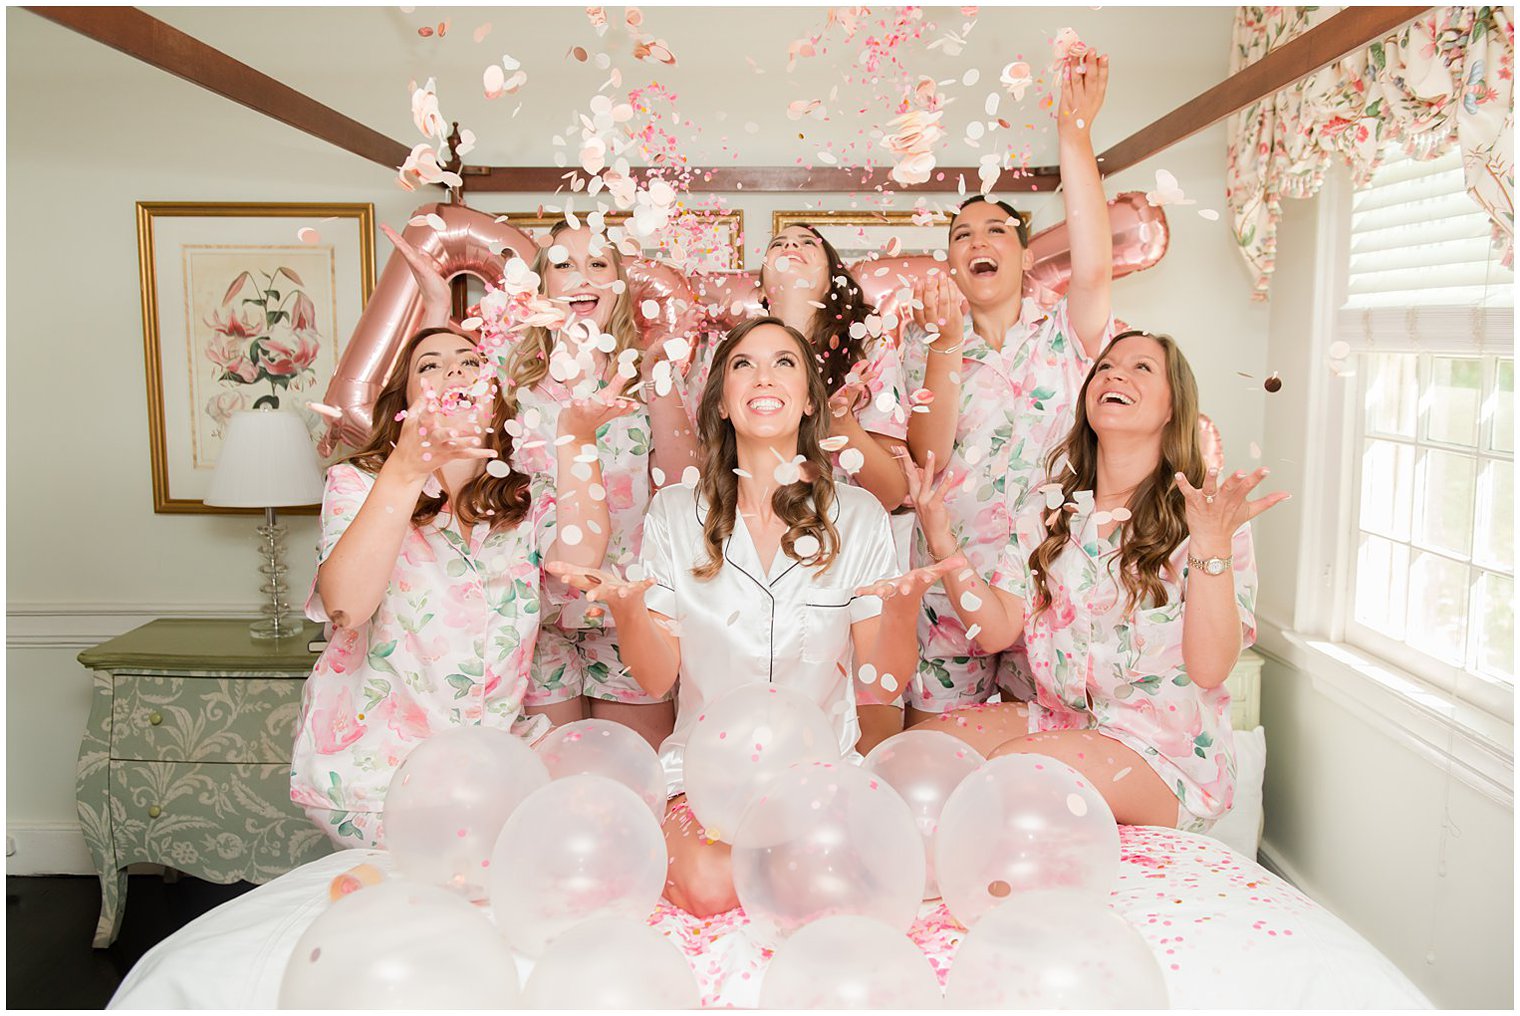 bride and bridesmaids throw confetti during wedding prep